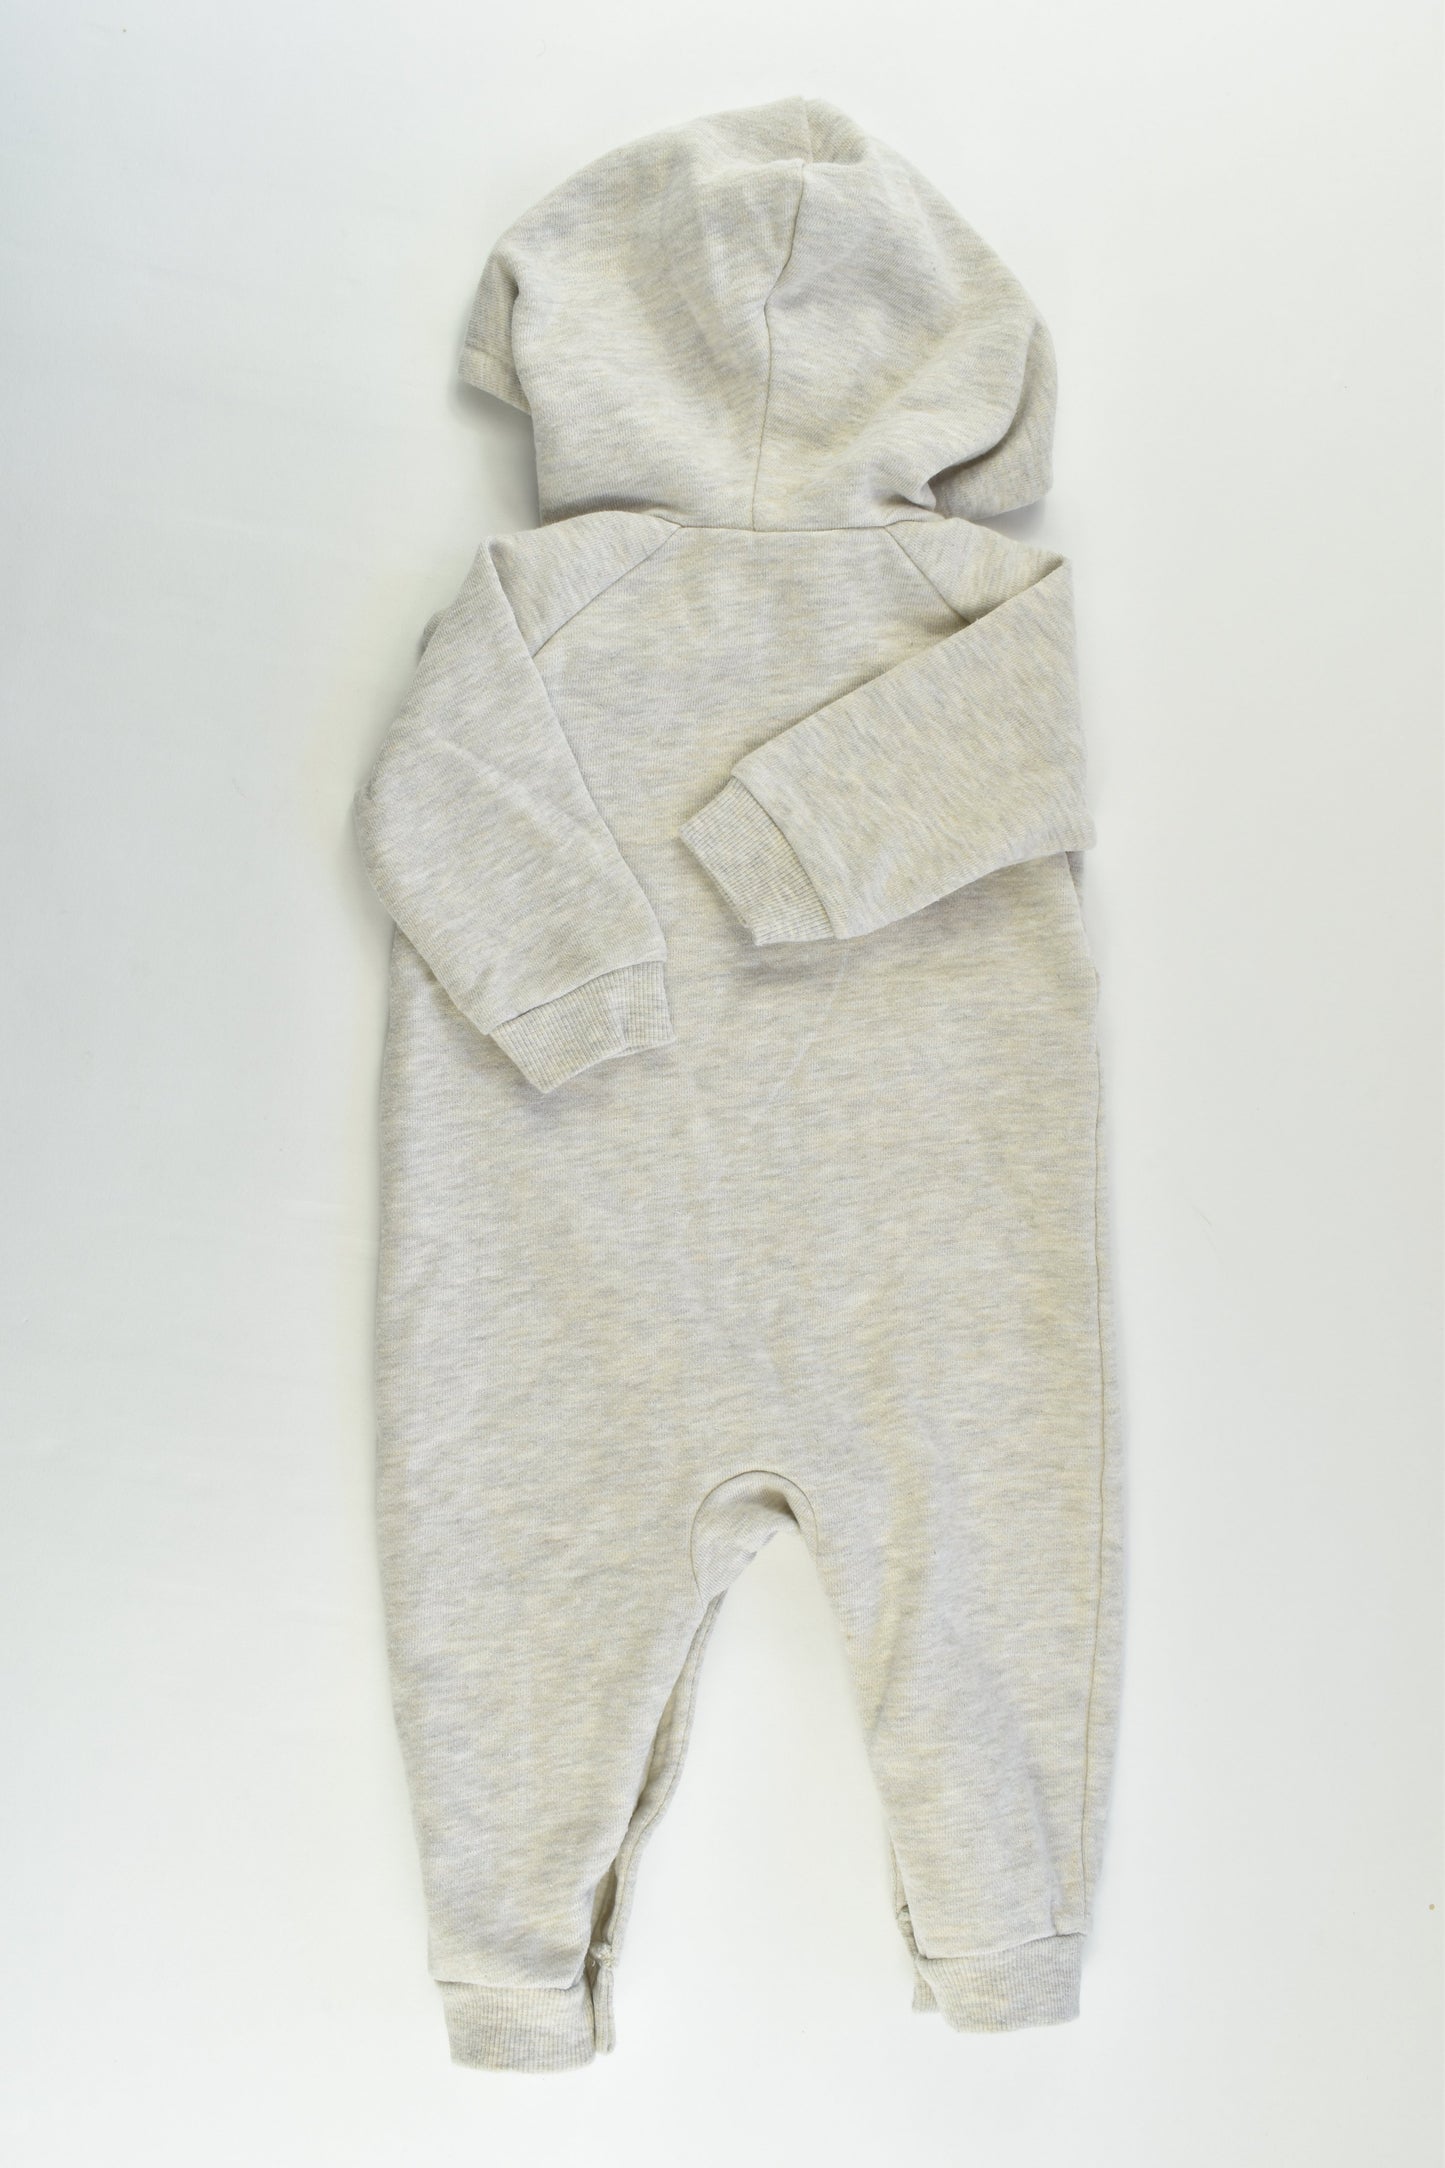 Anko Size 00 (3-6 months) Rabbit Sweater Playsuit